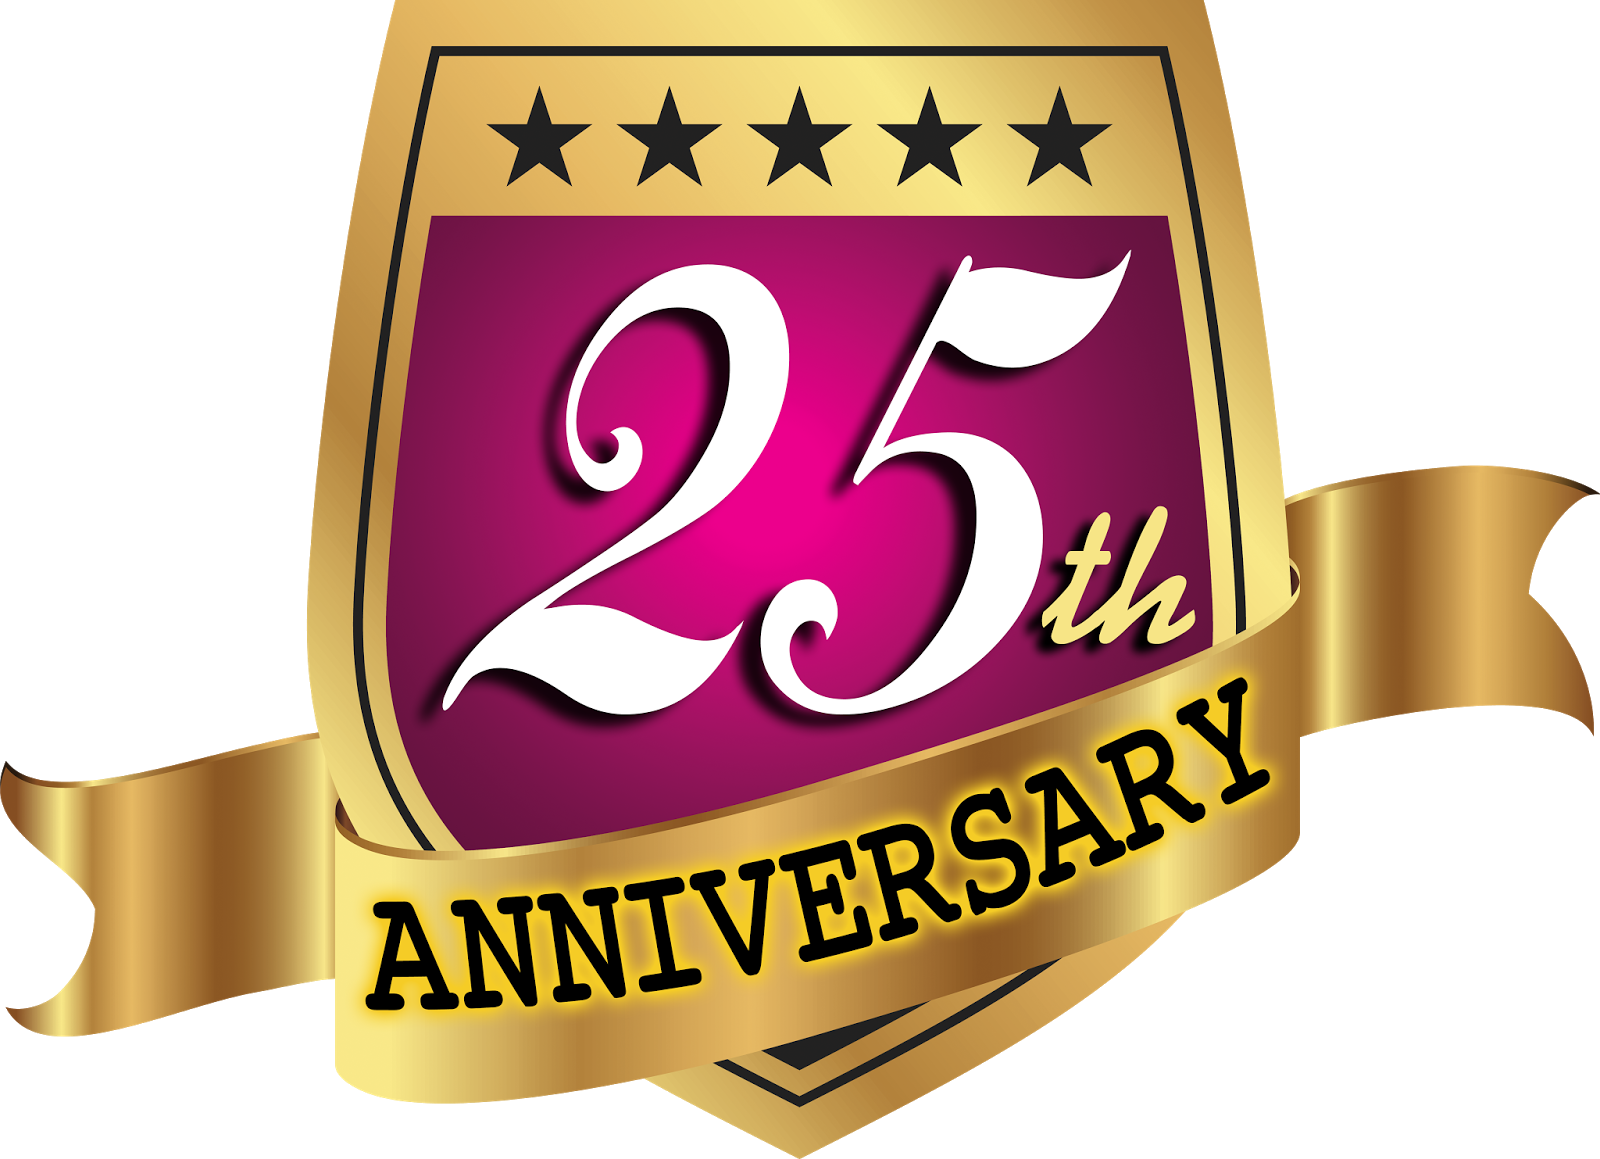 25th Anniversary Logos